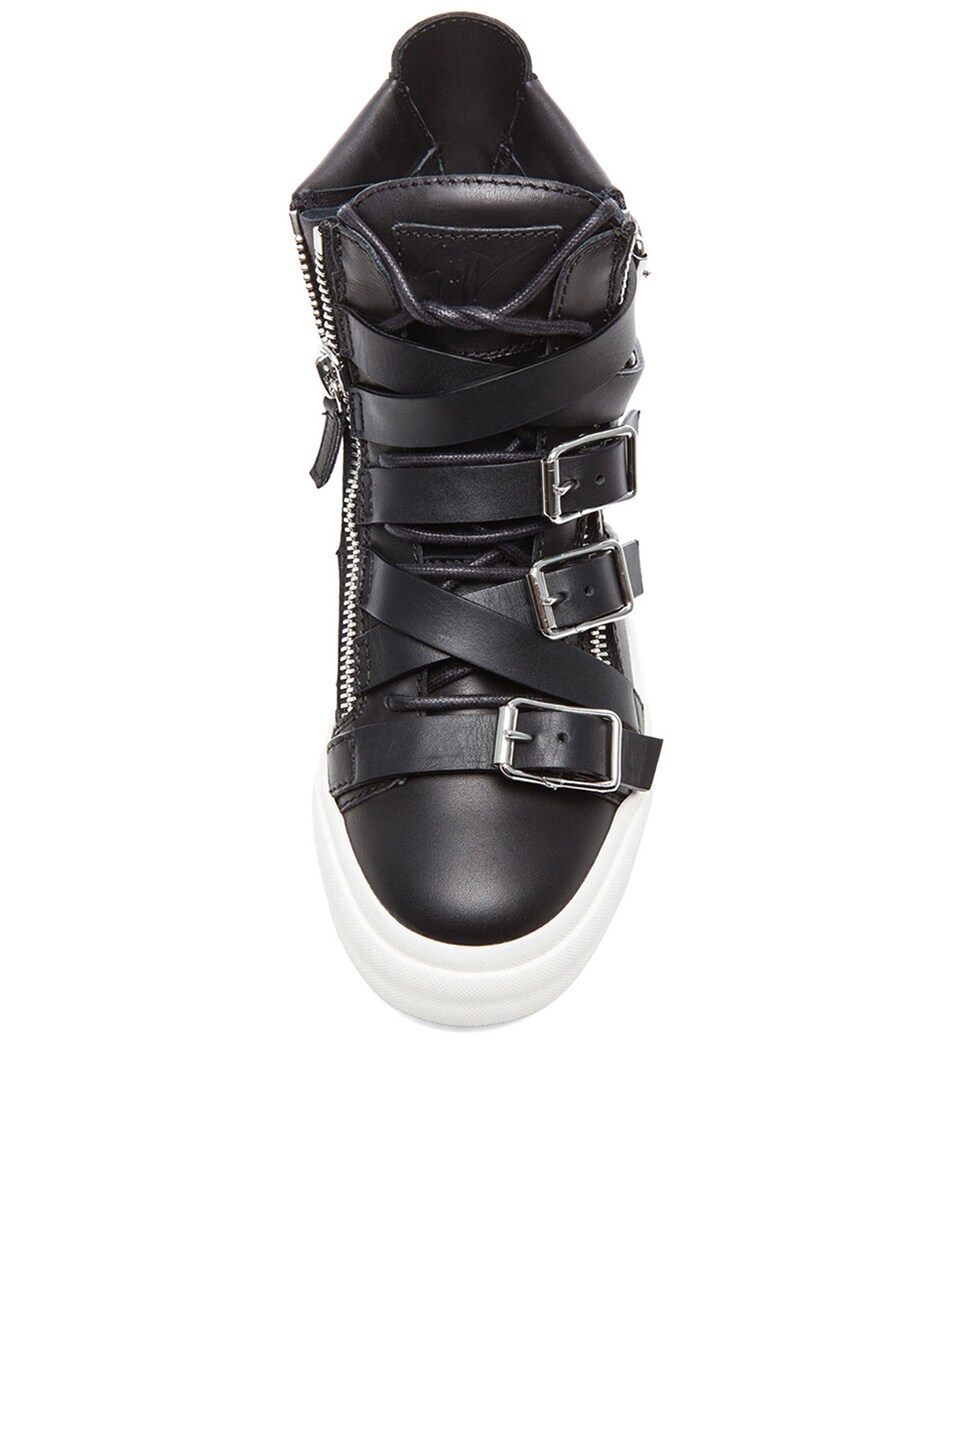 GIUSEPPE ZANOTTI London Buckles Leather Sneakers In Black